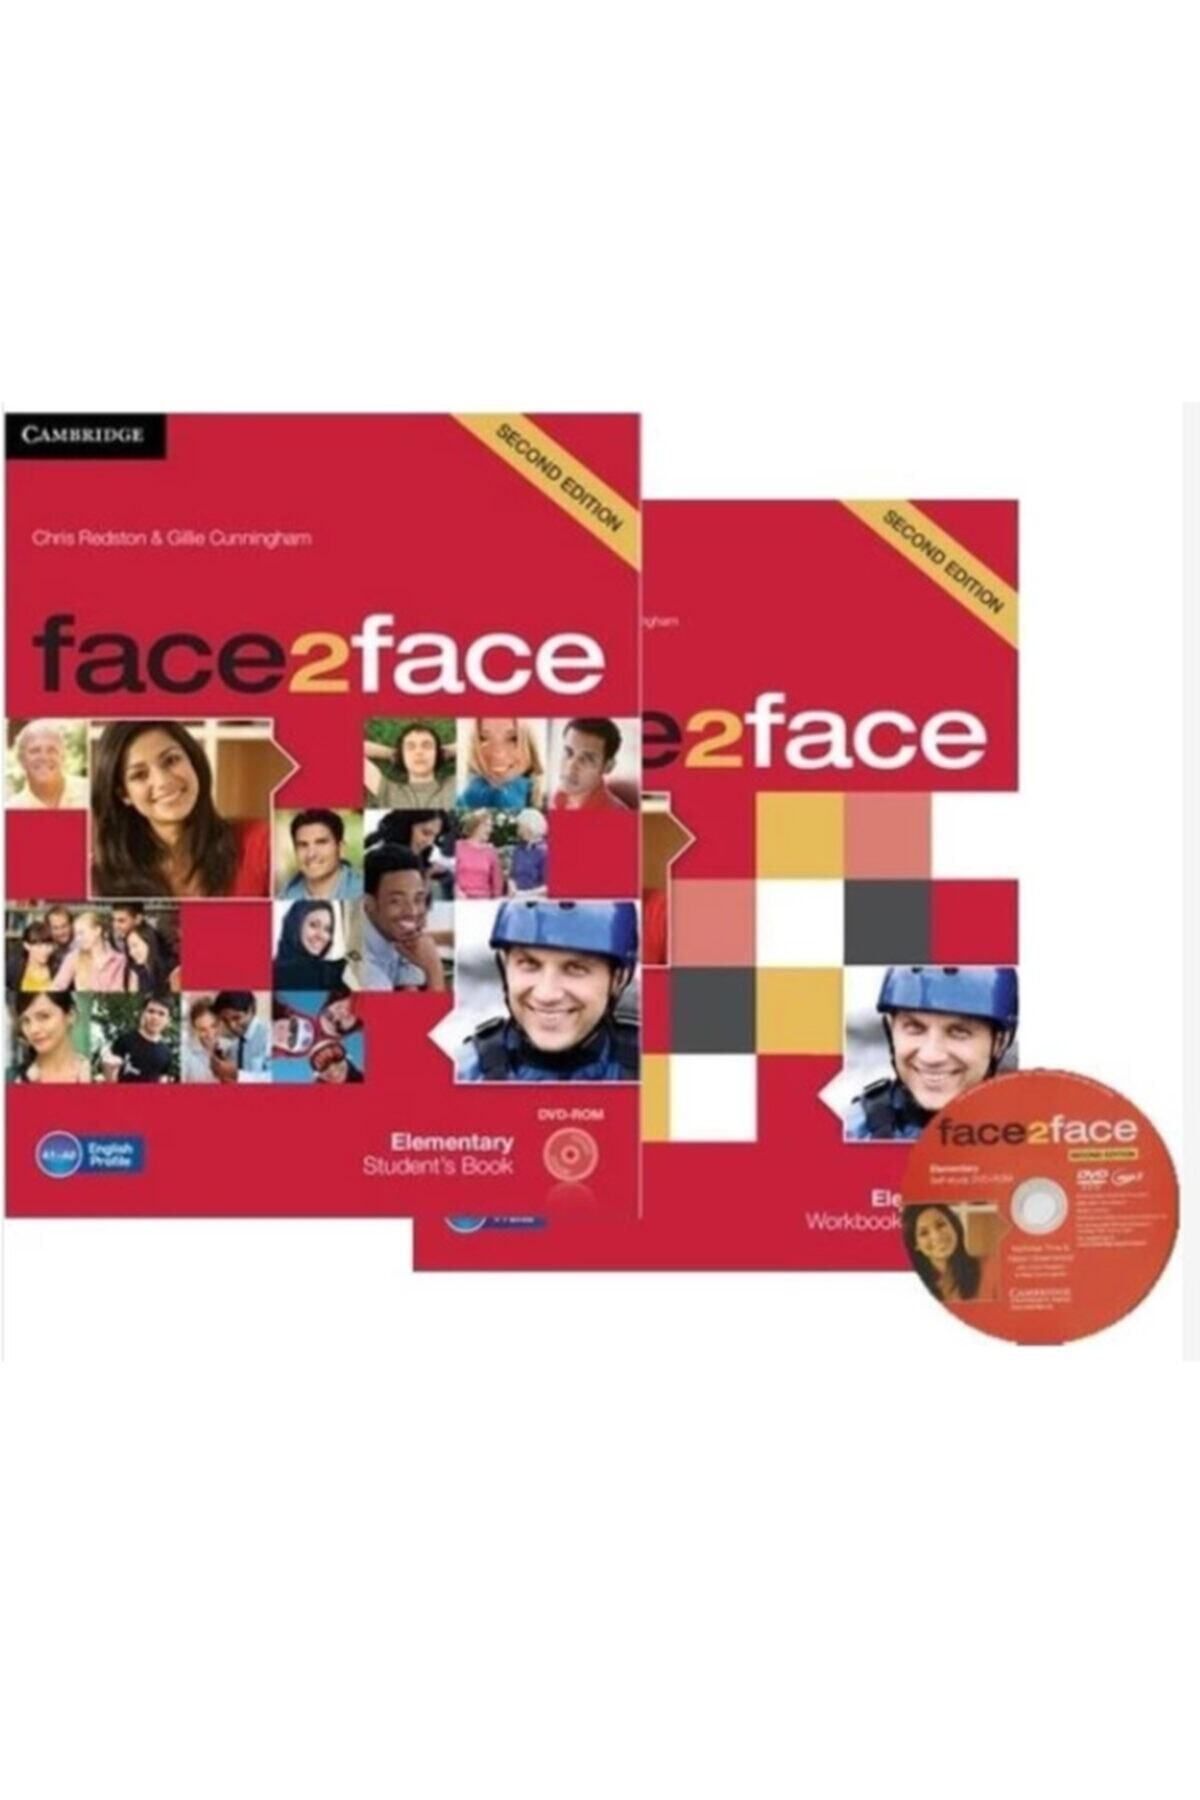 Face2face elementary. Face2face Elementary student's book. Face to face Elementary. Учебник Оксфорд Education Soul face Elementary Workbook аудирование 1.02. Suits 2 Elementary Full book.